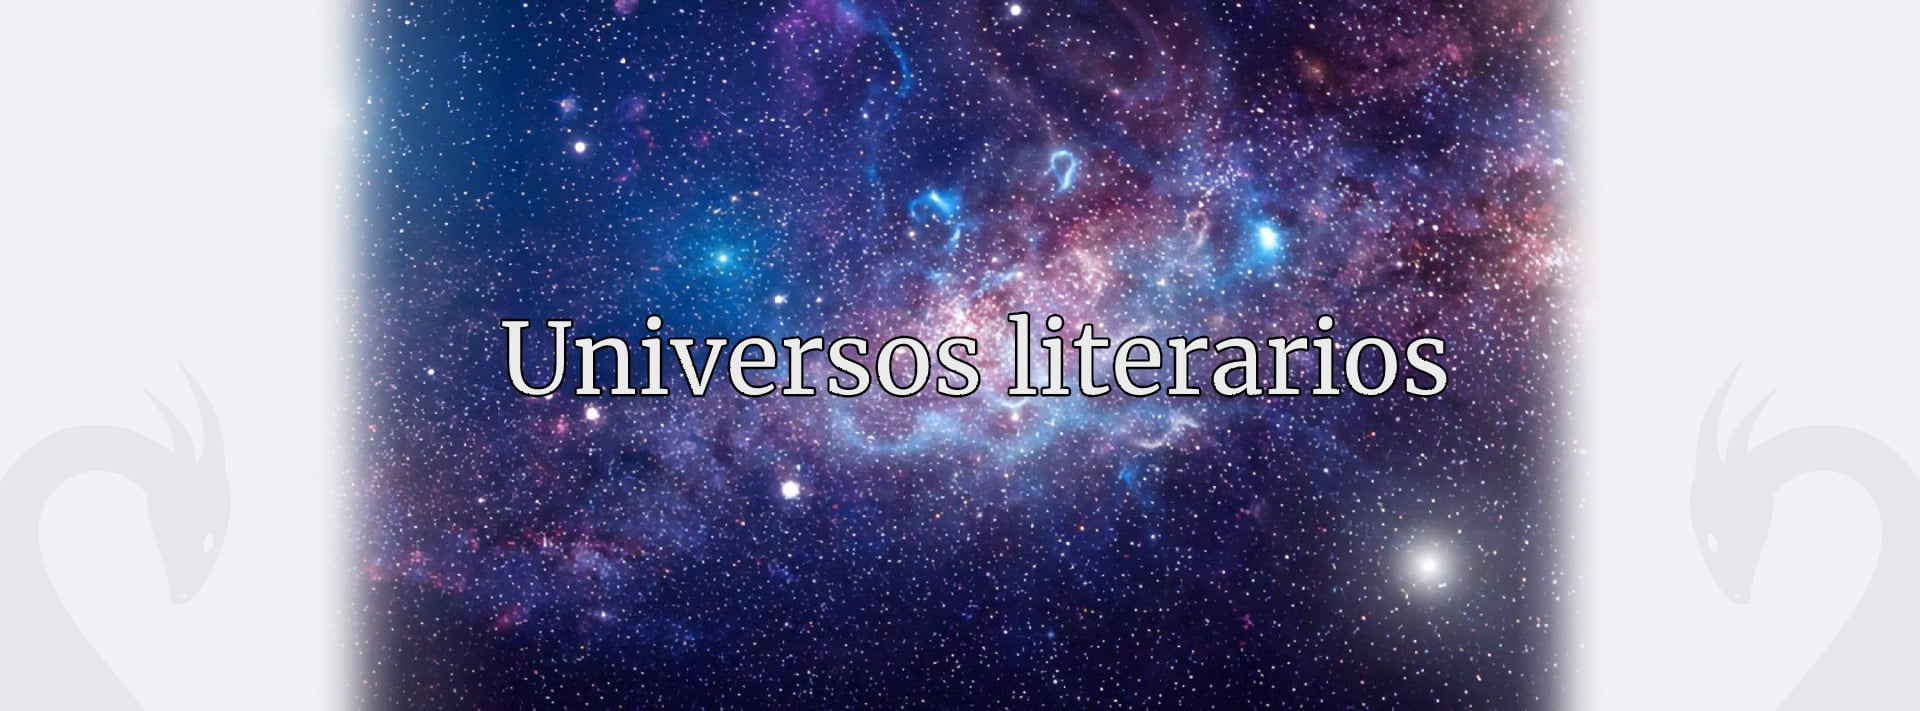 Portada universos literarios